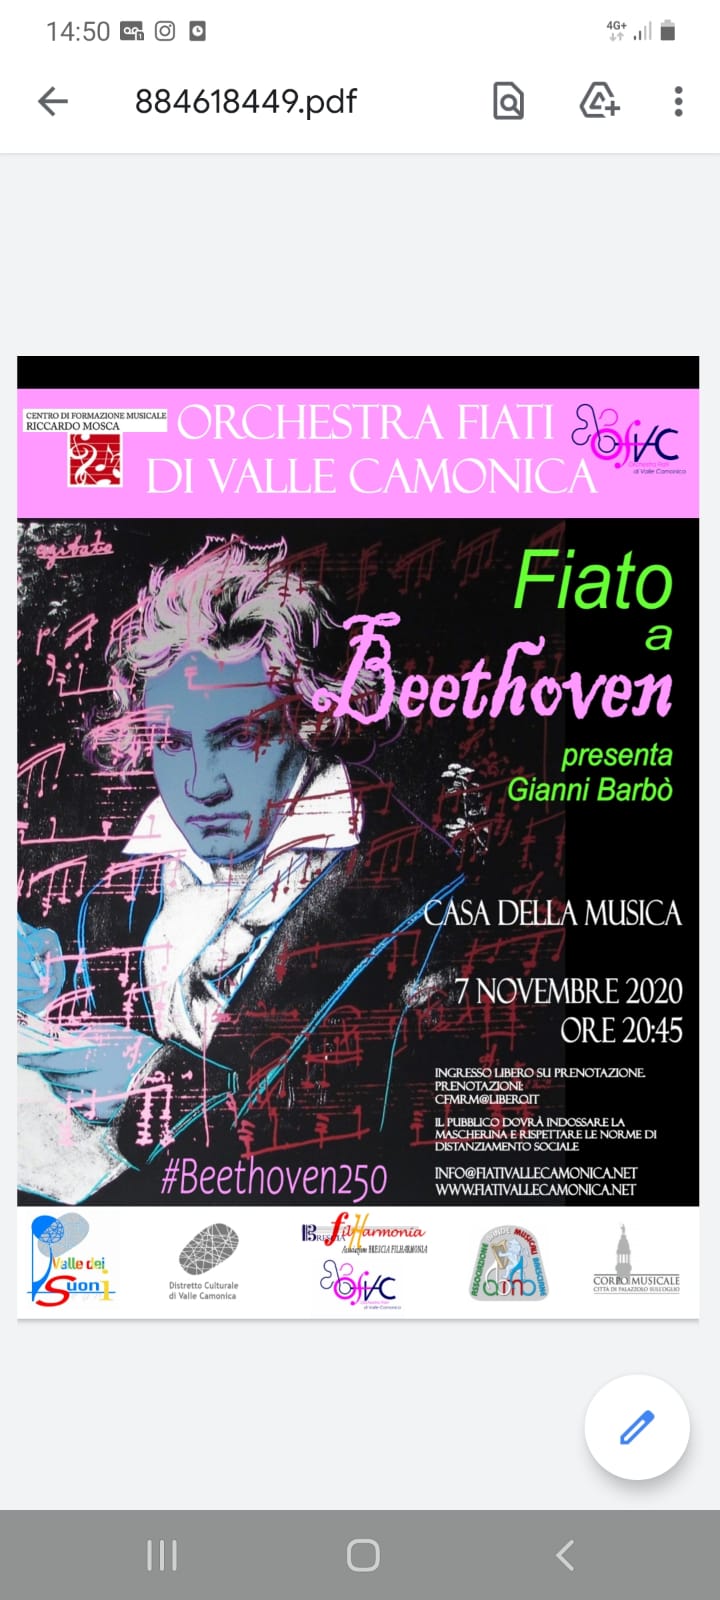 7/11 – Fiato a Beethoven